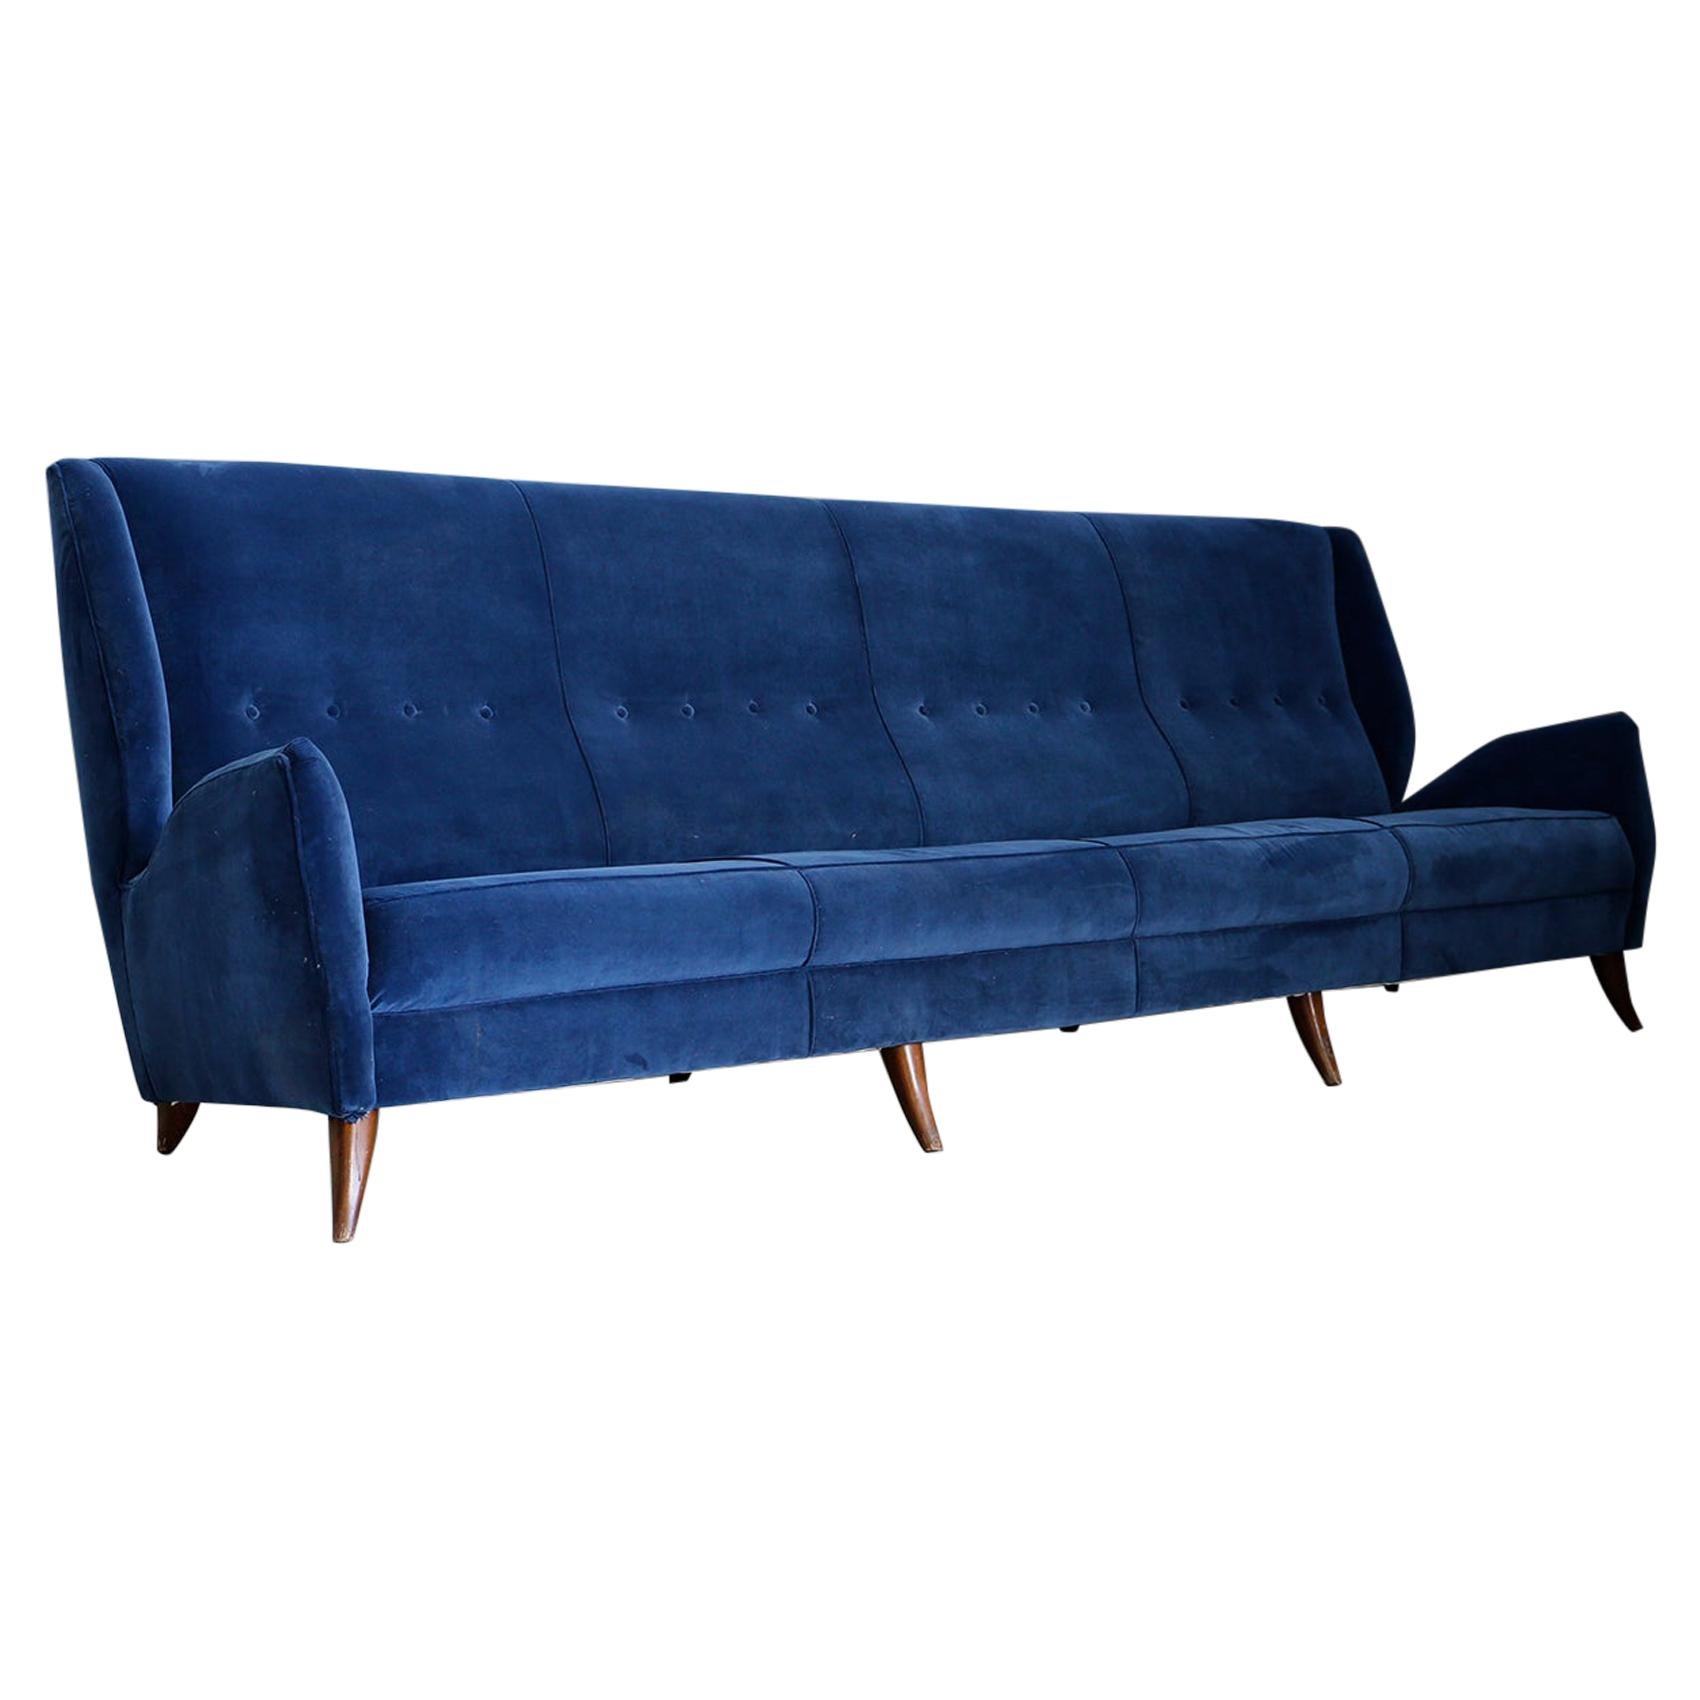 Sofa attributed to Gio Ponti for Isa Bergamo in Blue Velvet, Restored 1950s